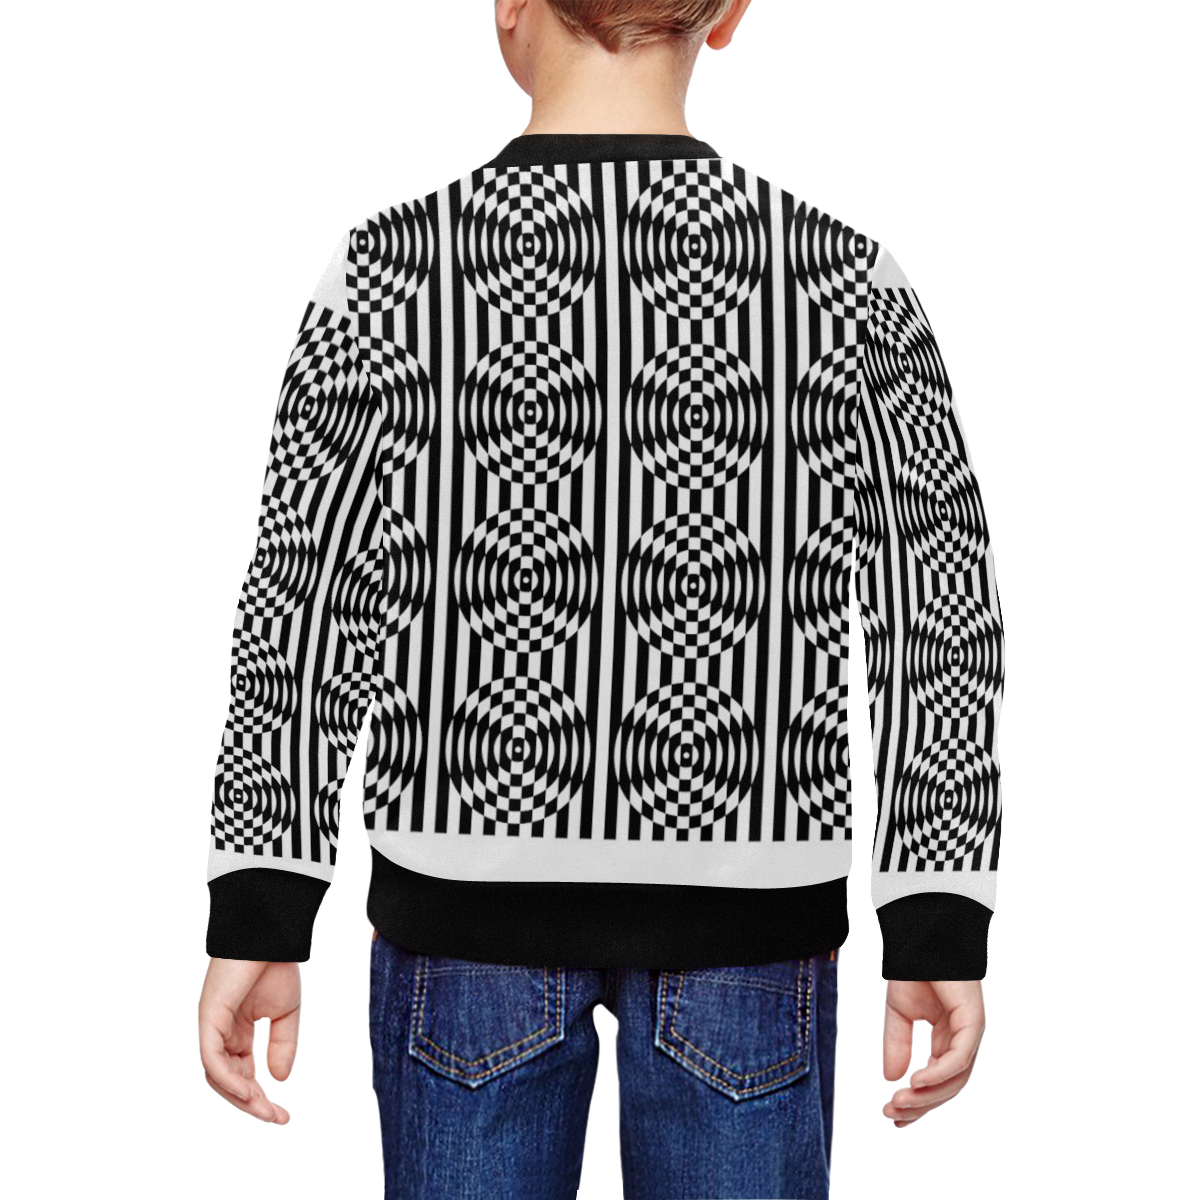 black geometric All Over Print Crewneck Sweatshirt for Kids (Model H29)